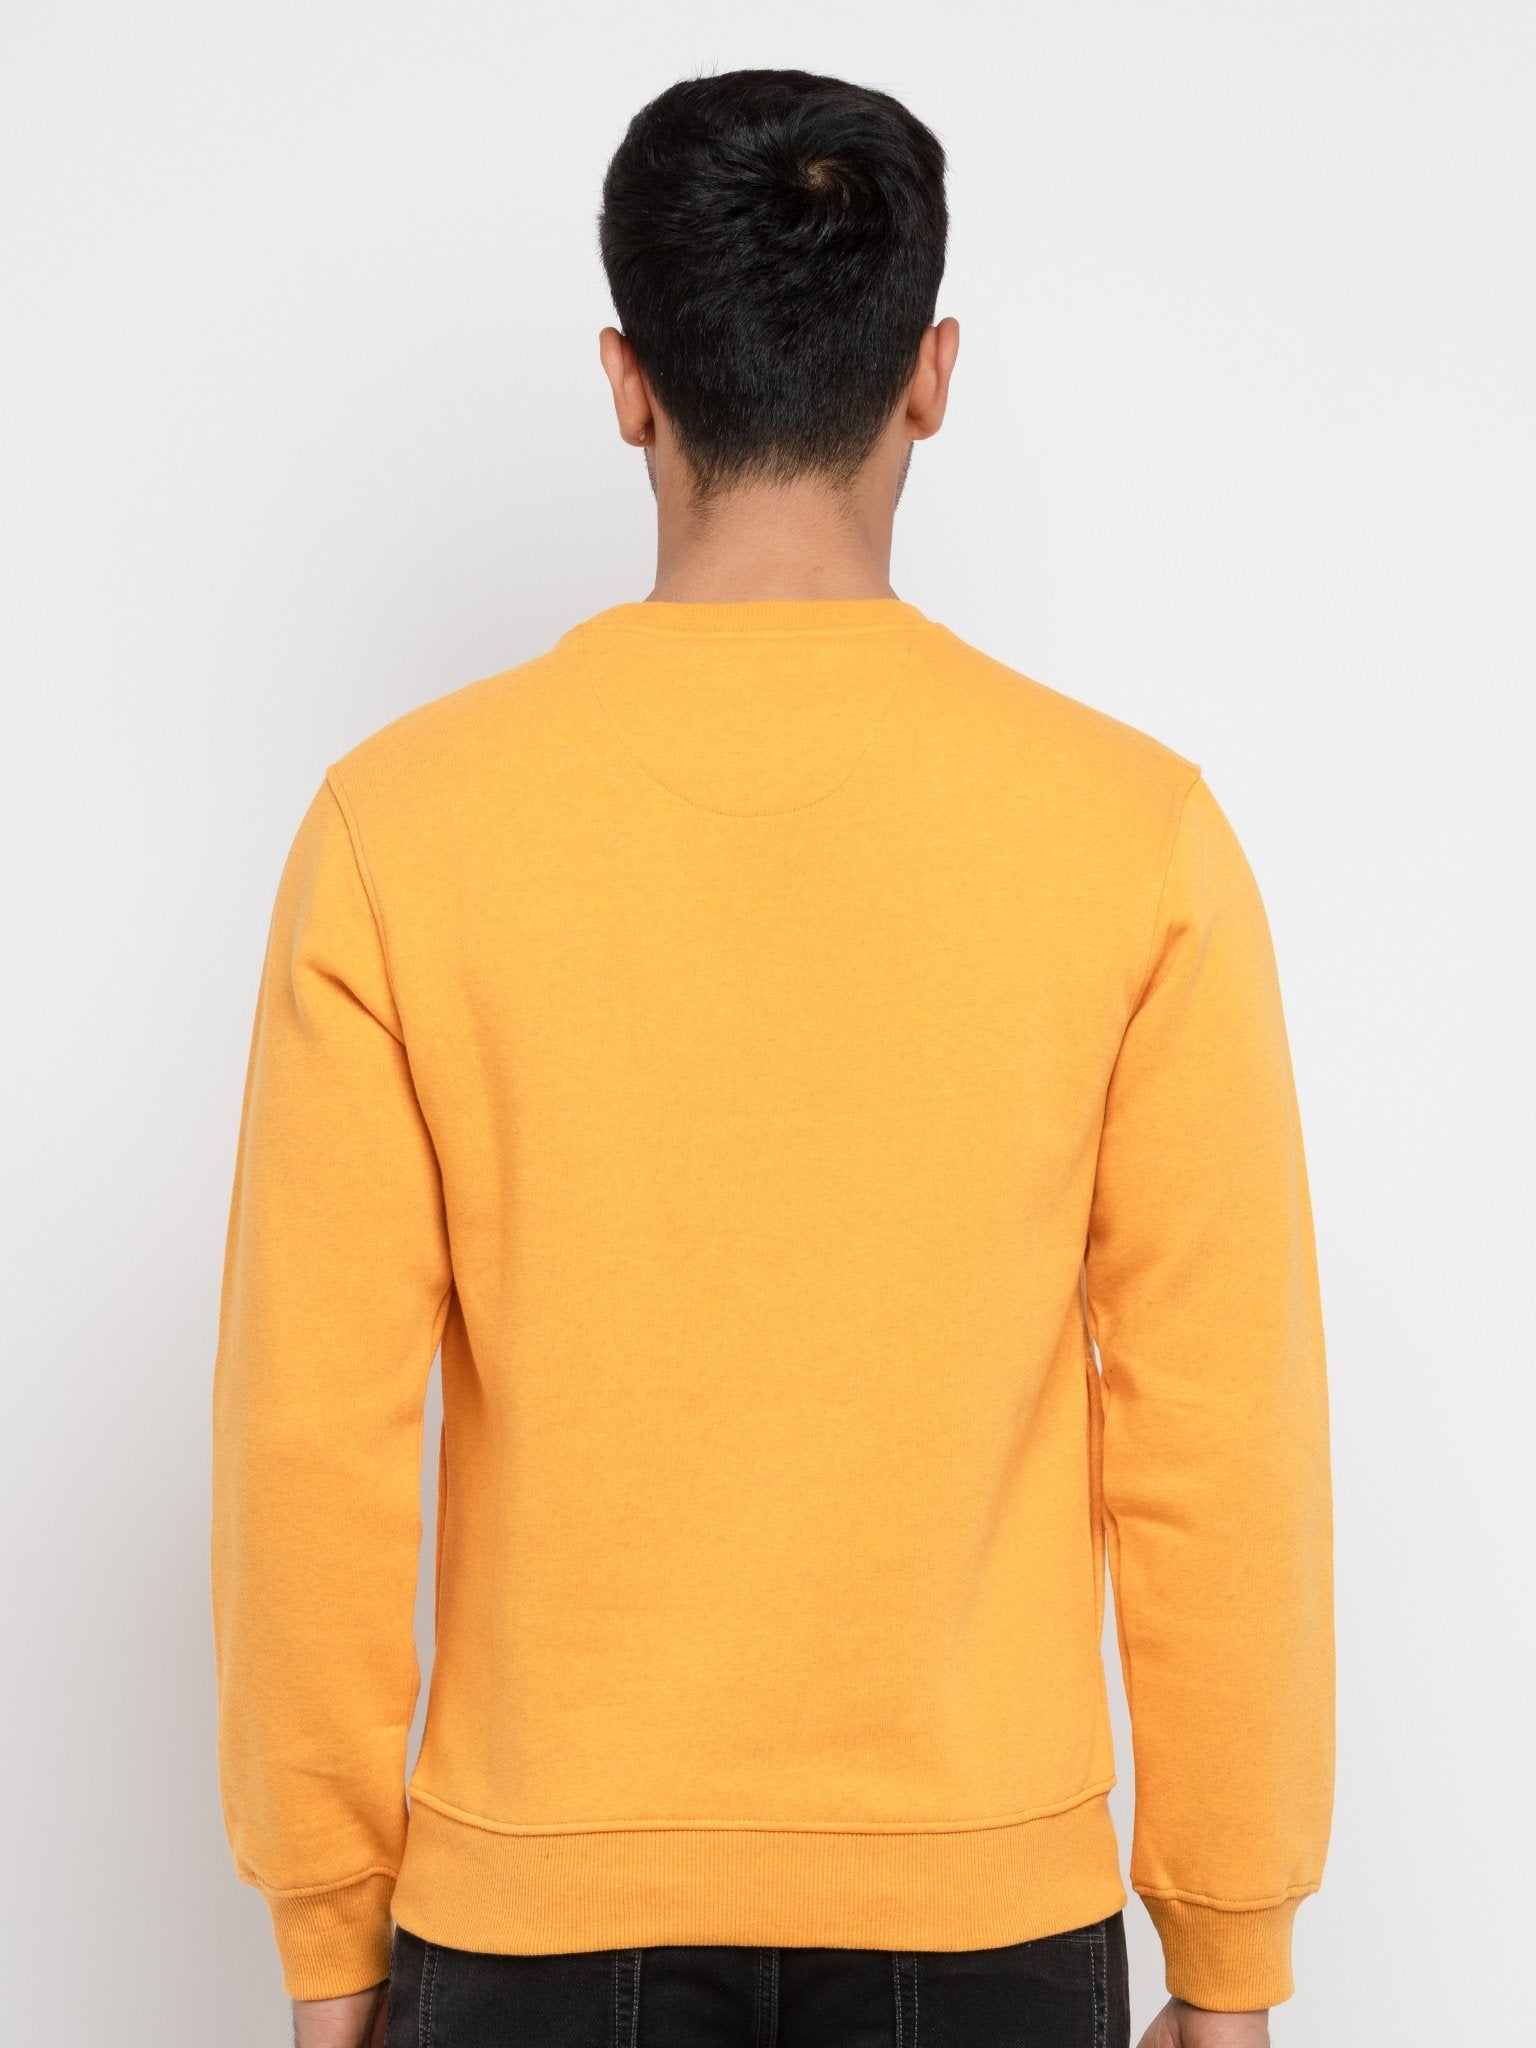 Status Quo | Men's Yellow Polycotton Printed Sweatshirts 5